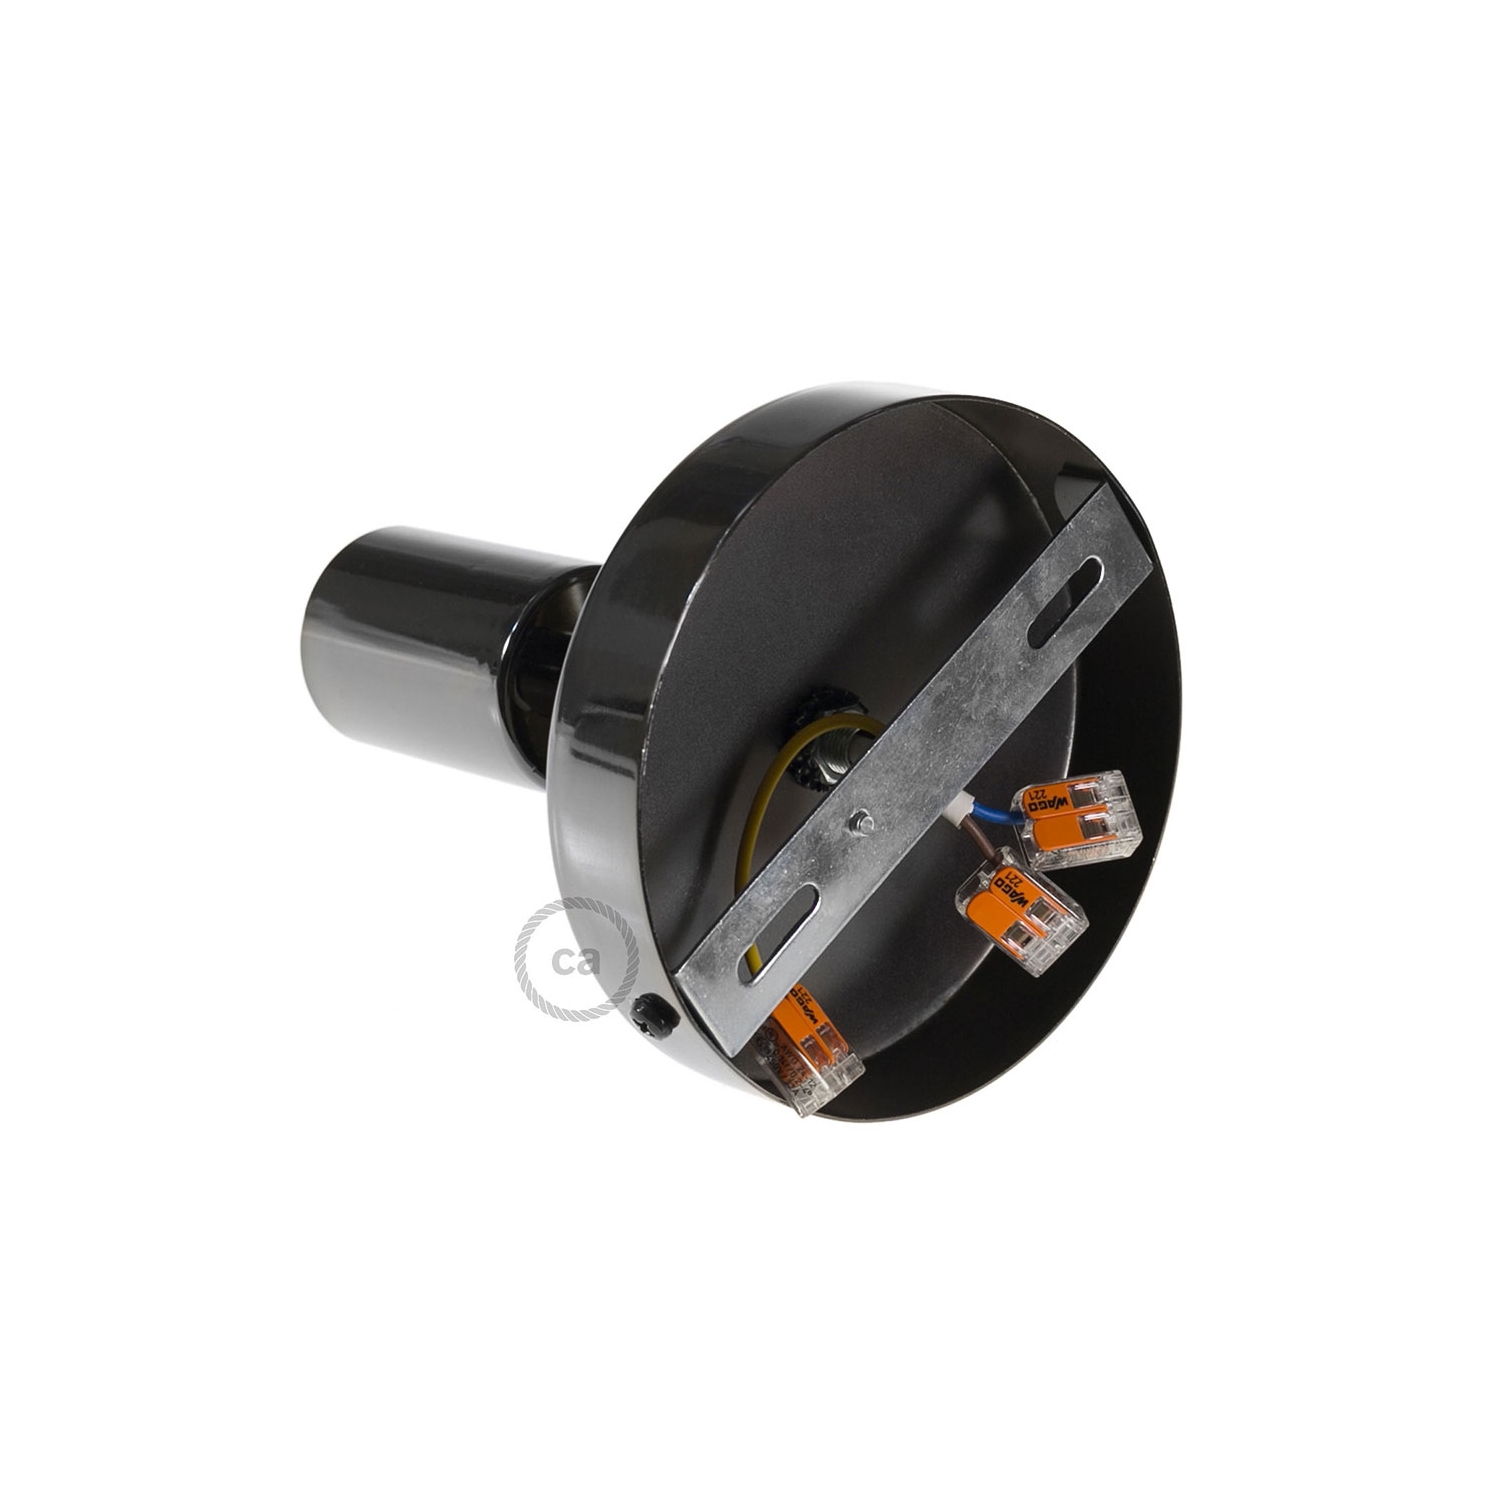 Fermaluce Metallo 90° Black Pearl adjustable, metal wall flush light